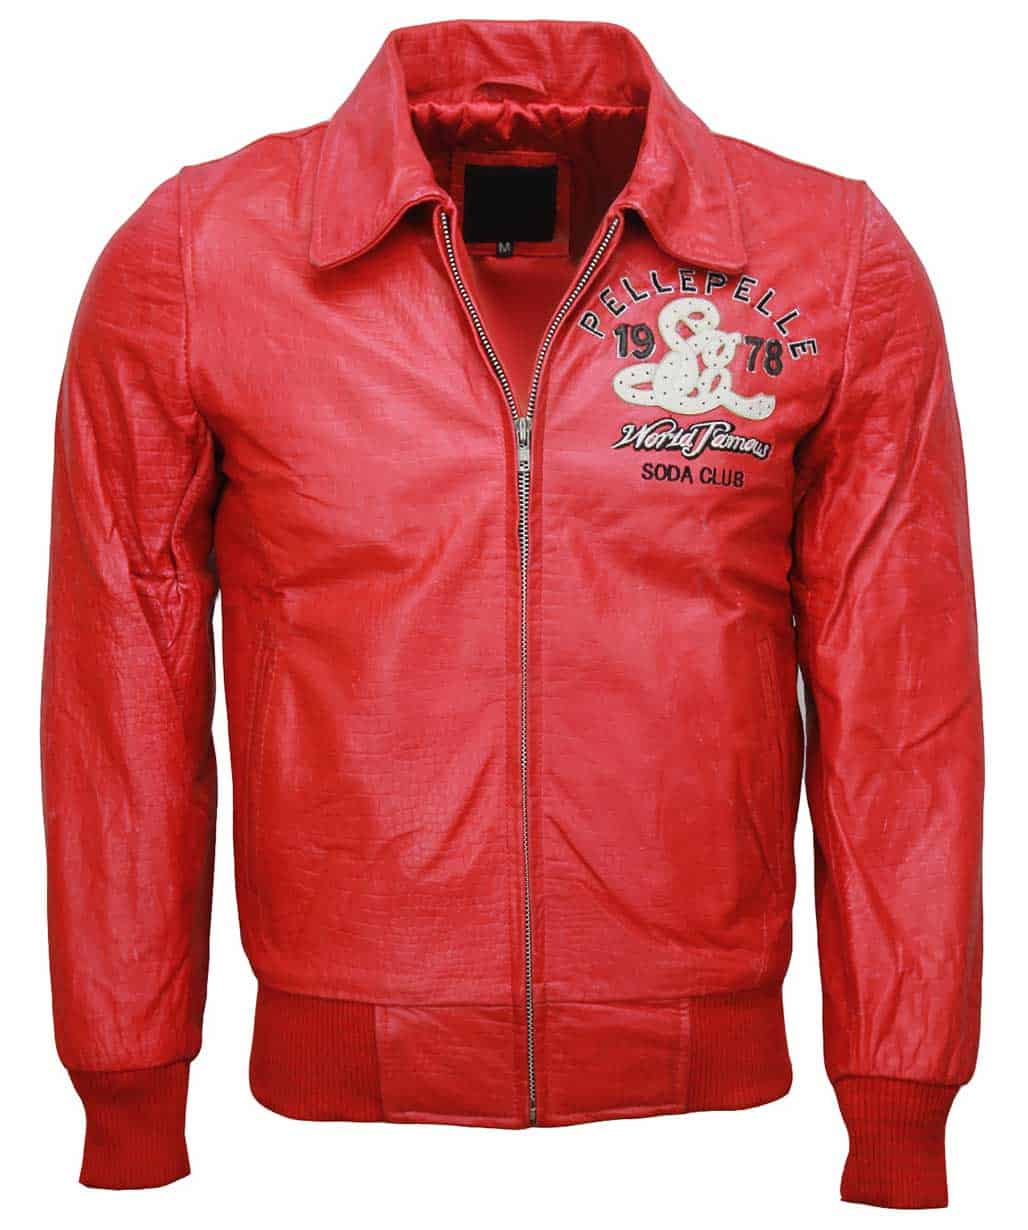 pelle-pelle-soda-club-red-leather-jacket-sale